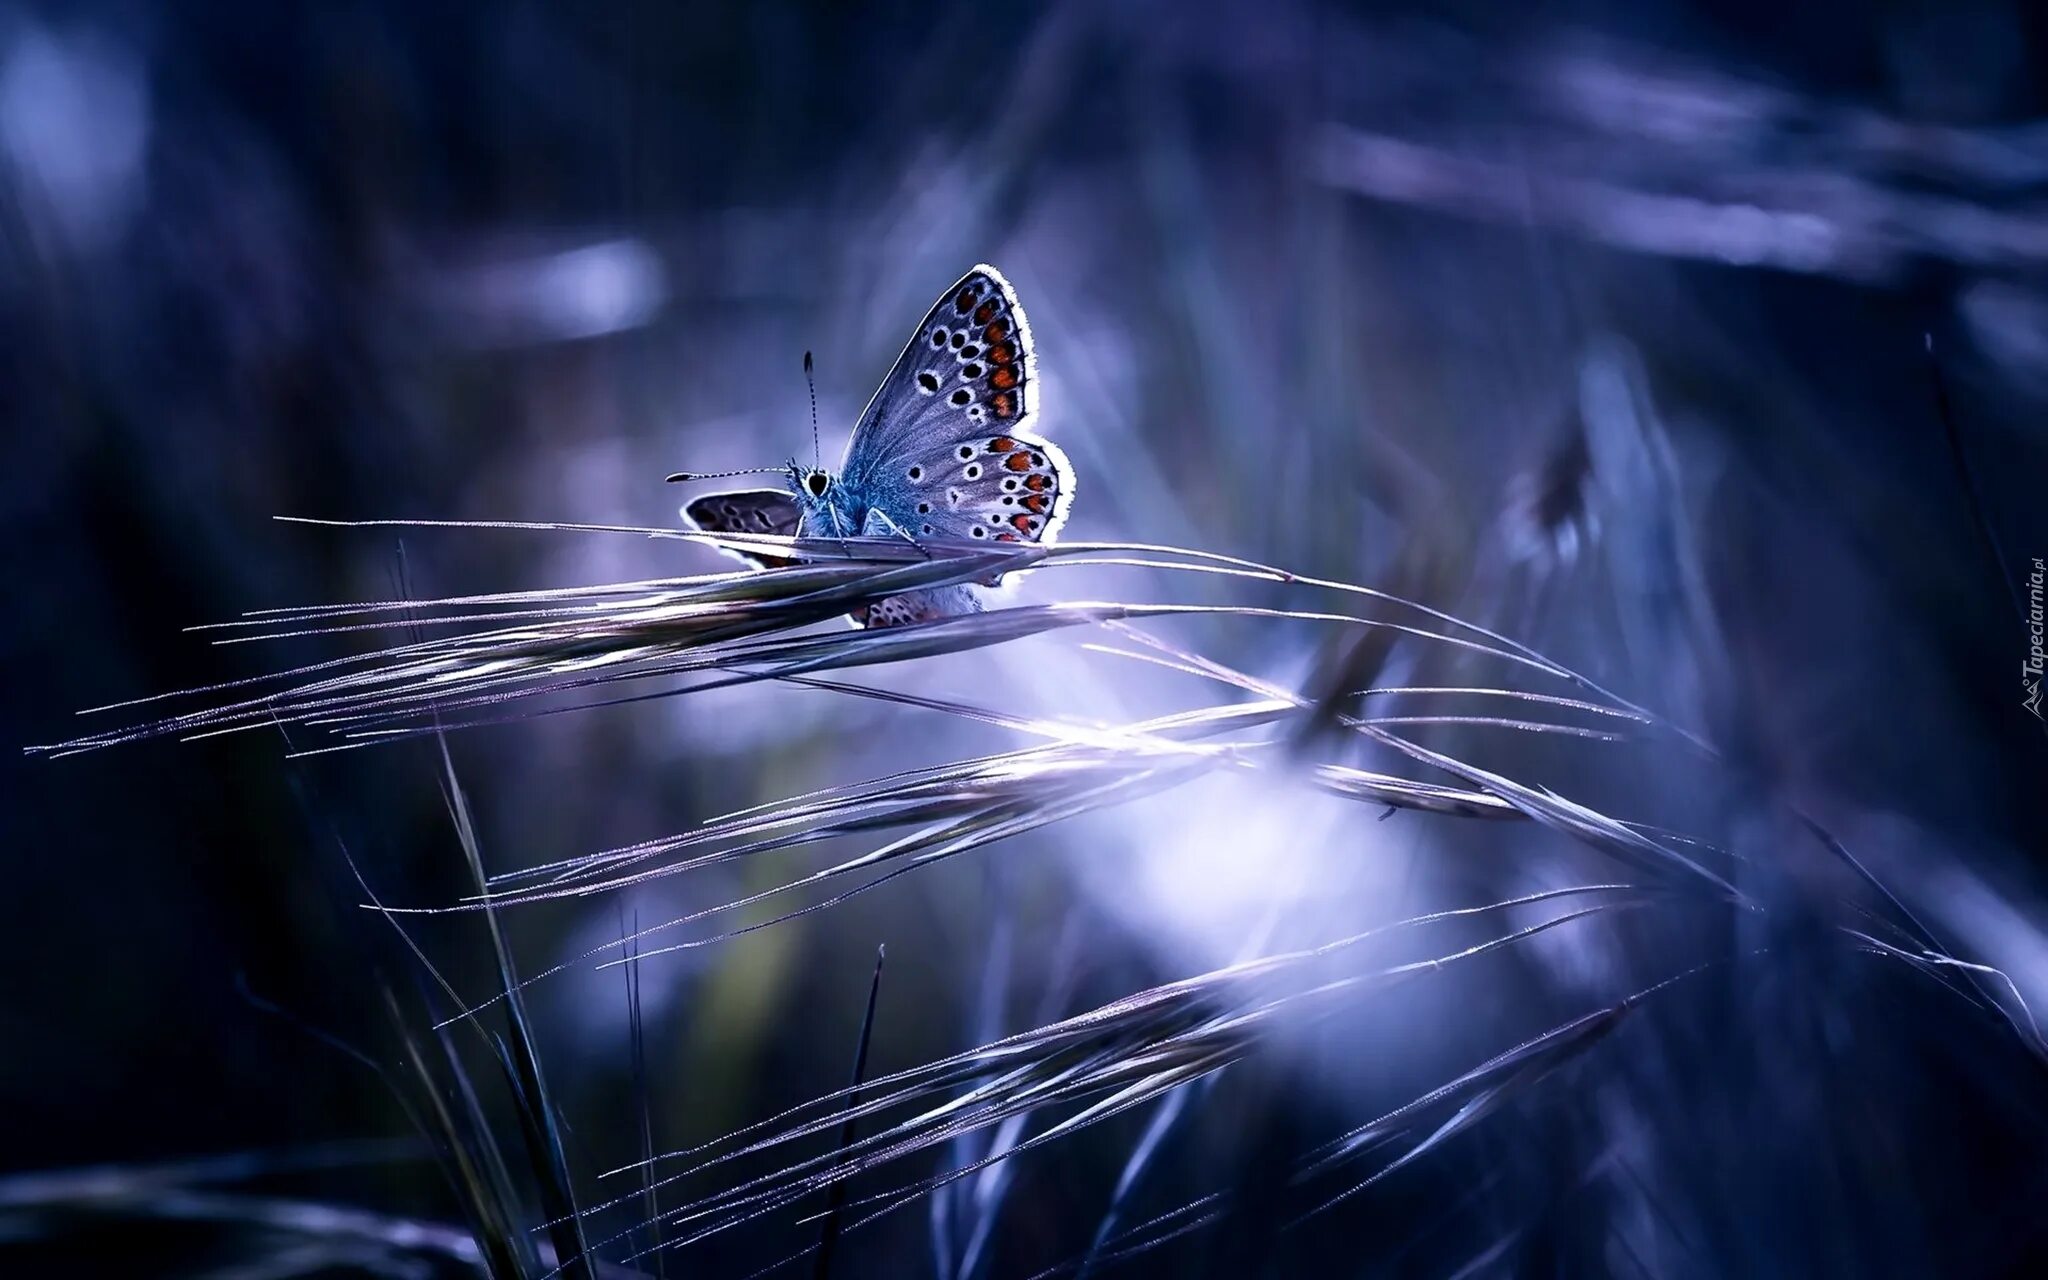 Взмах крыльев мотылька 2000. Голубая бабочка. Бабочки в природе. Ночная бабочка. Синяя бабочка.